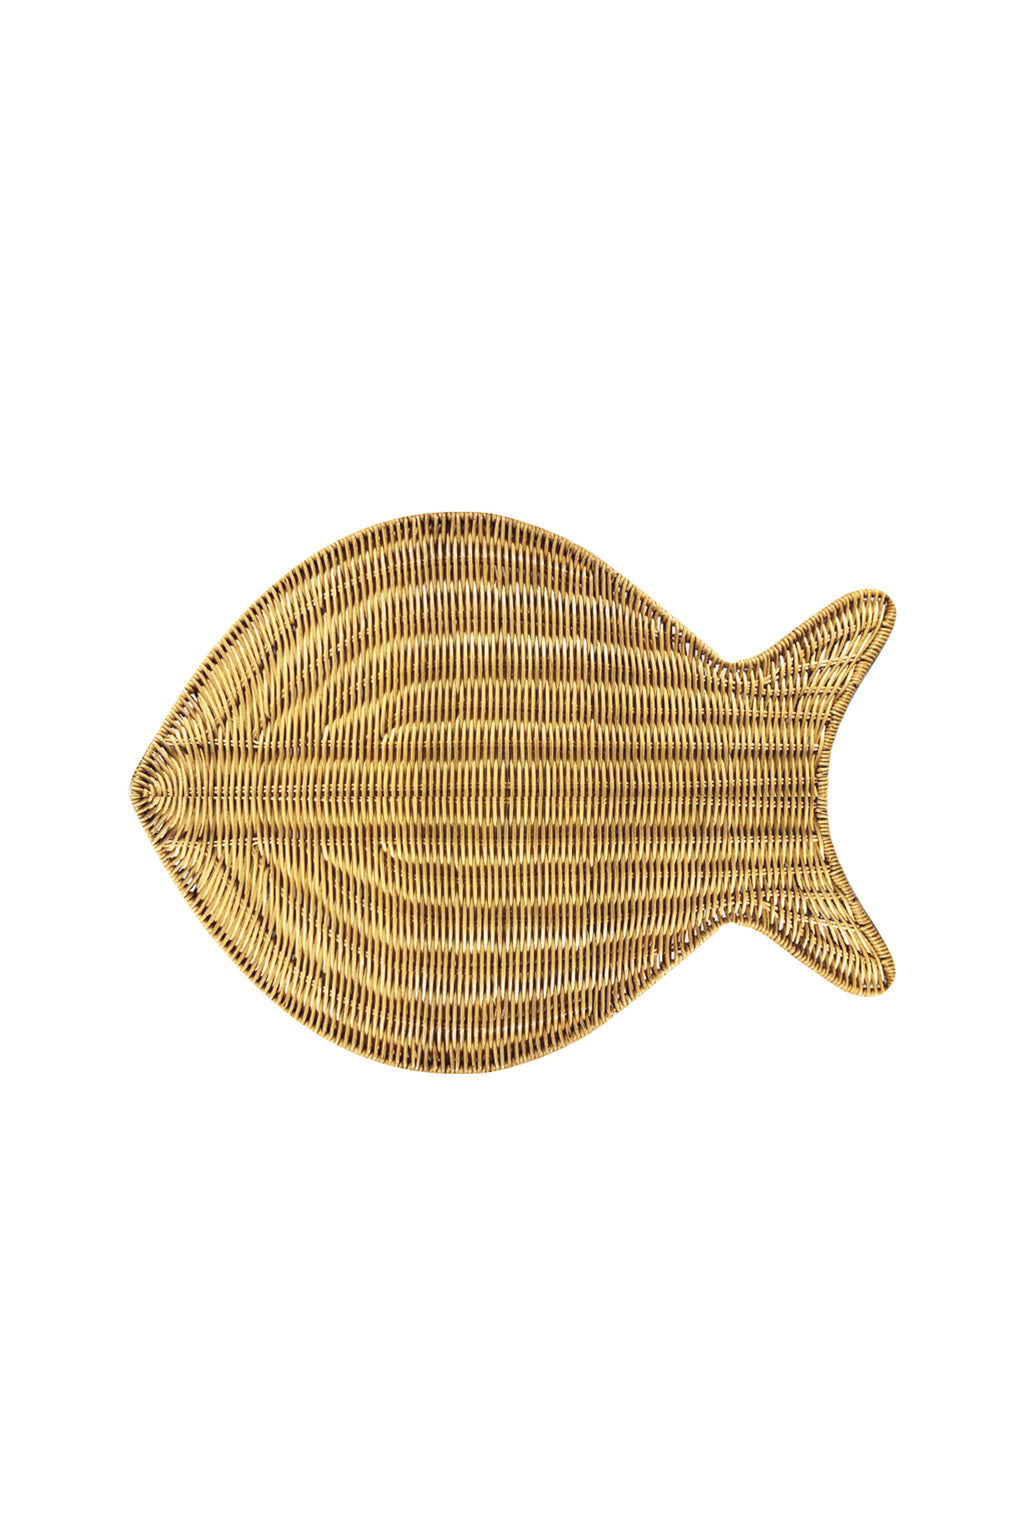 Fish Placemat - Natural